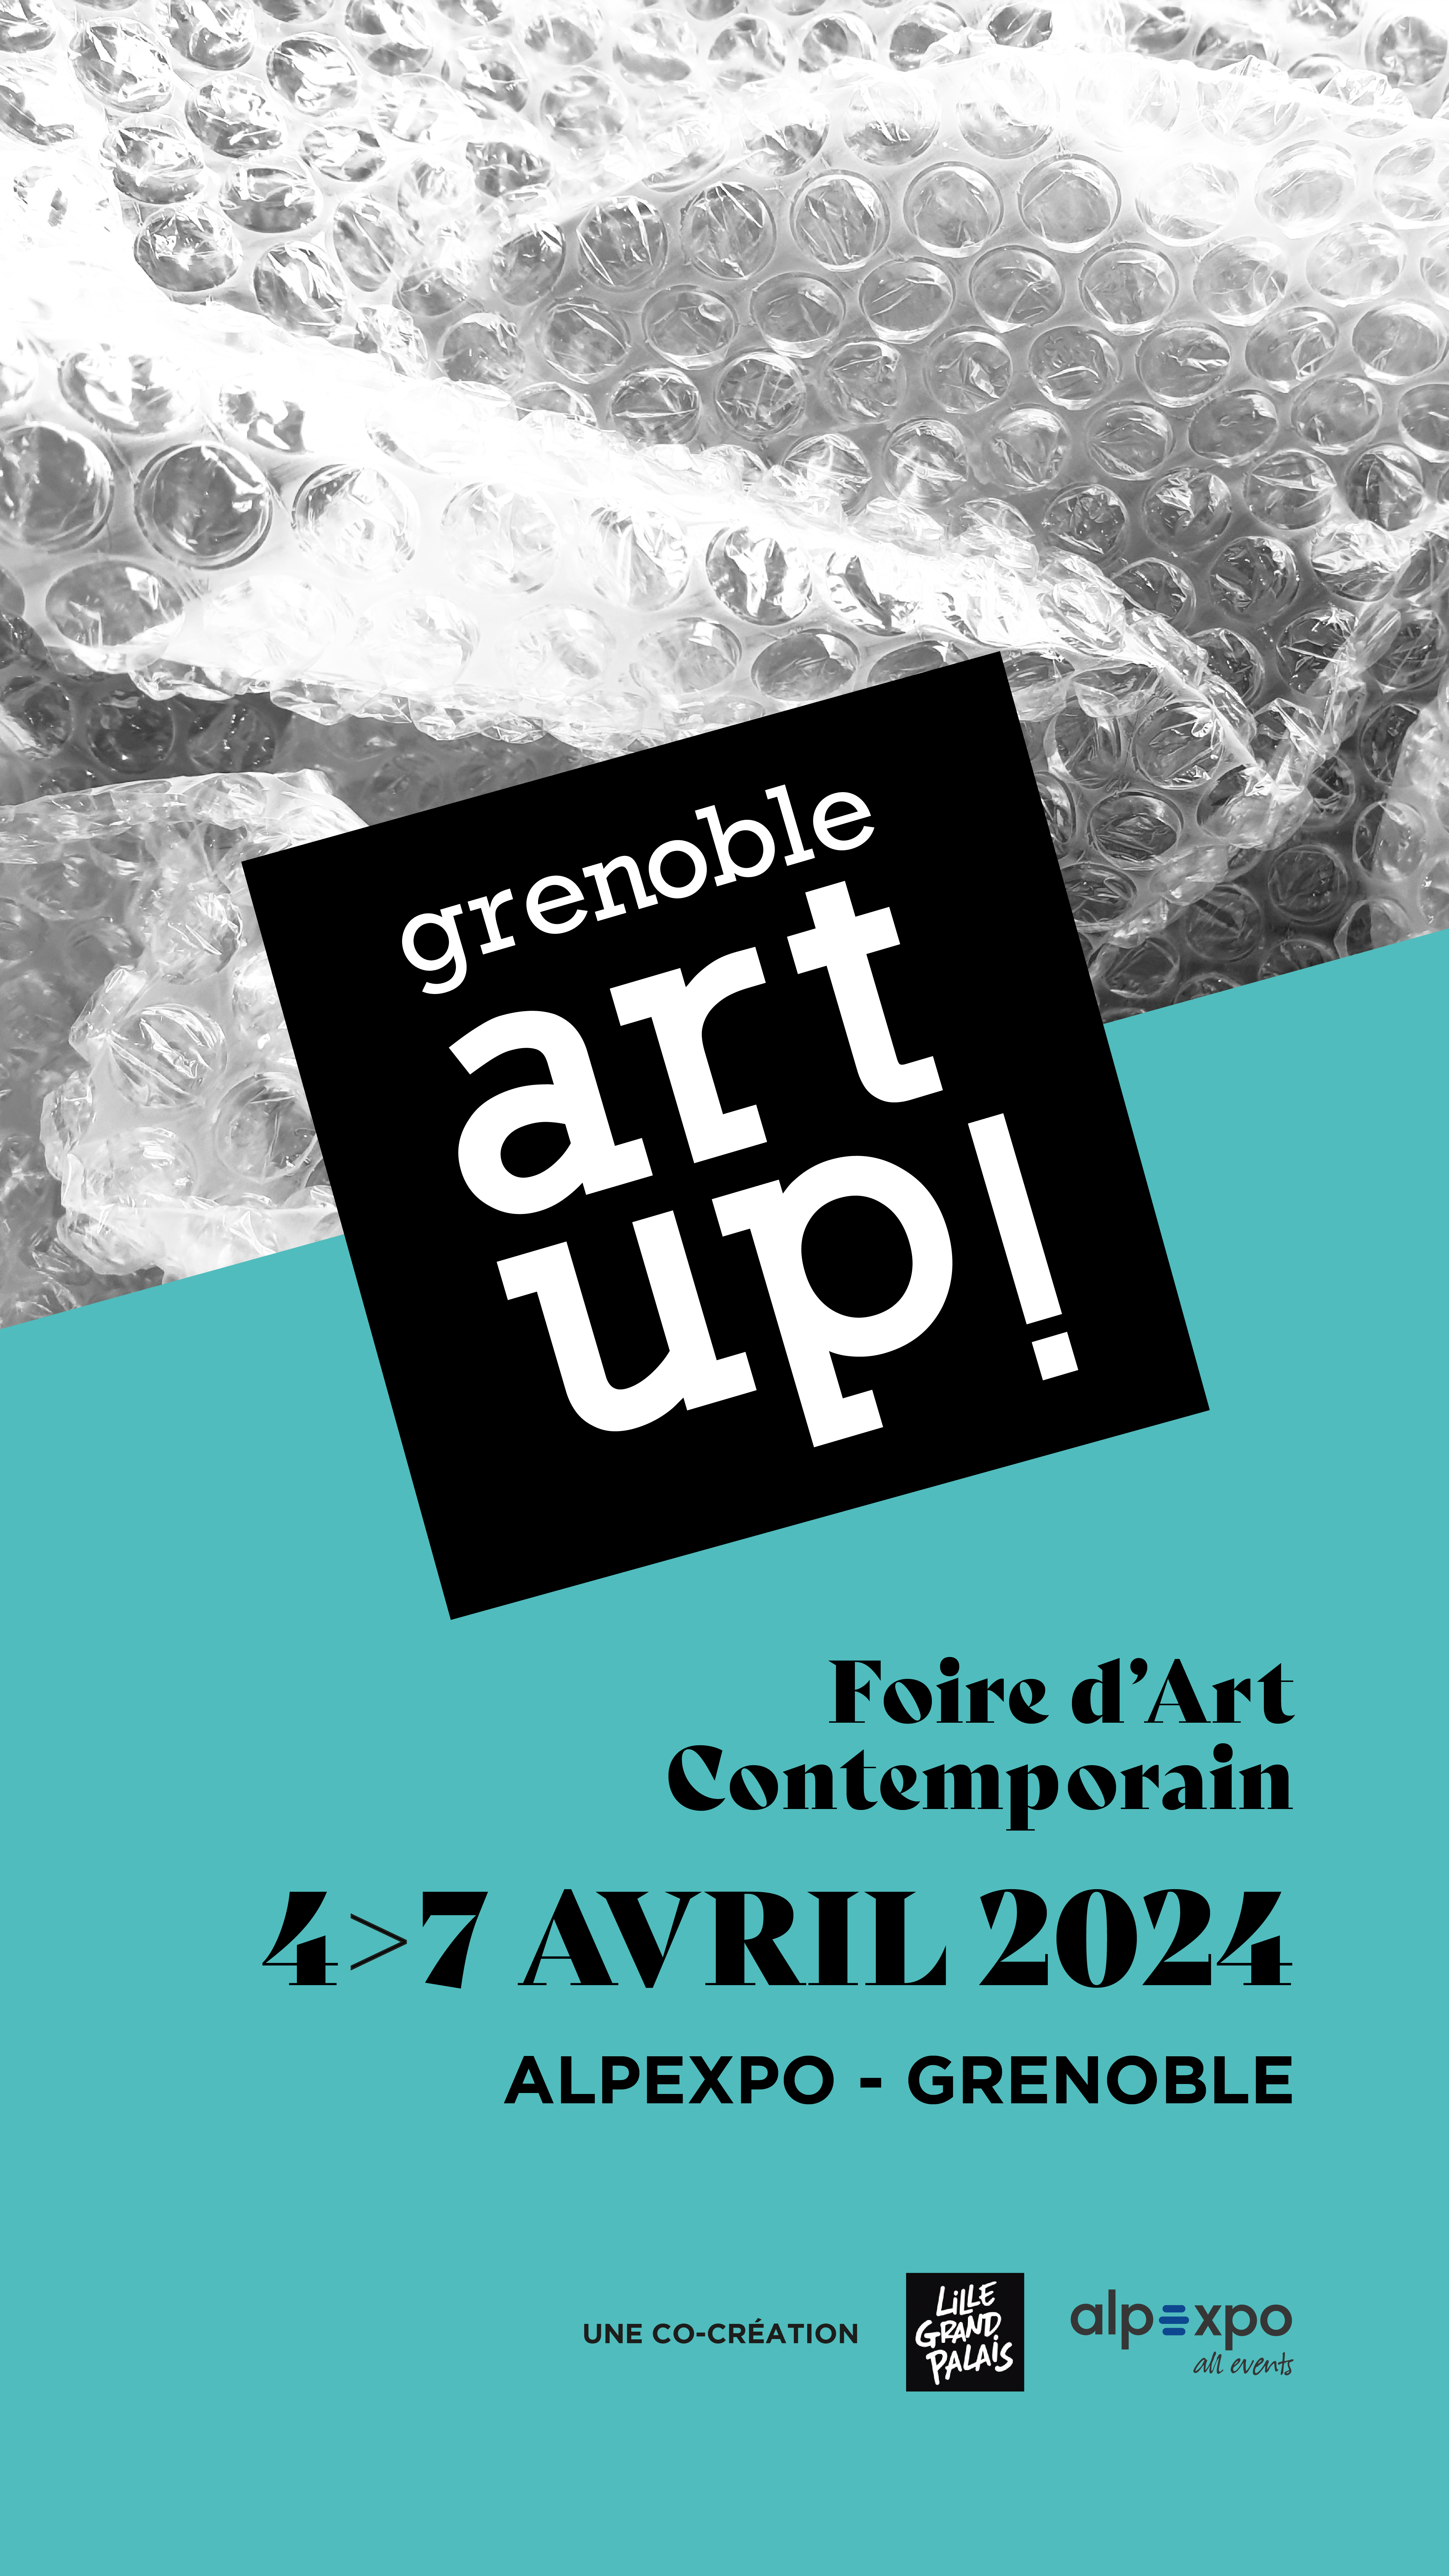 Visites Flash des expositions - Grenoble Art Up !